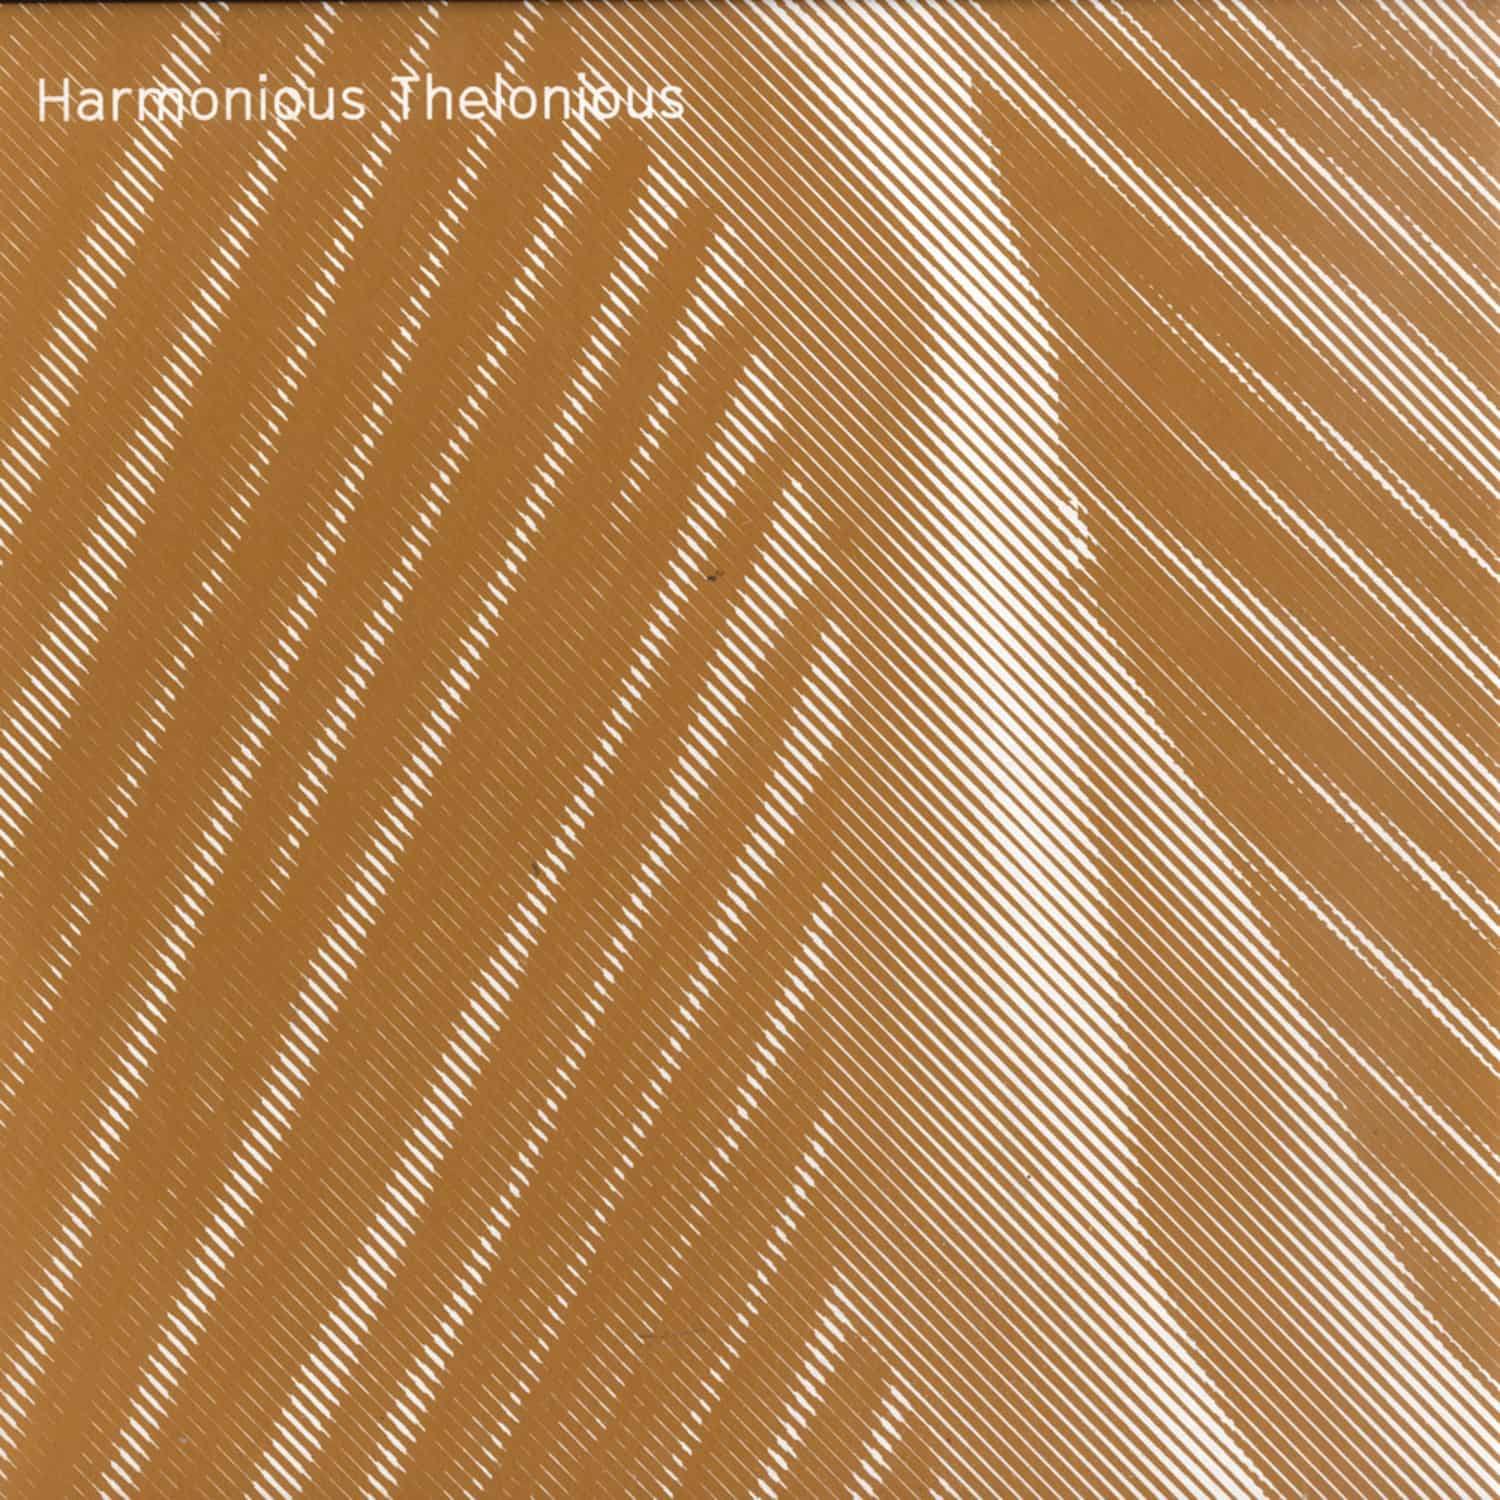 Harmonious Thlonious - JUST DRIFTING